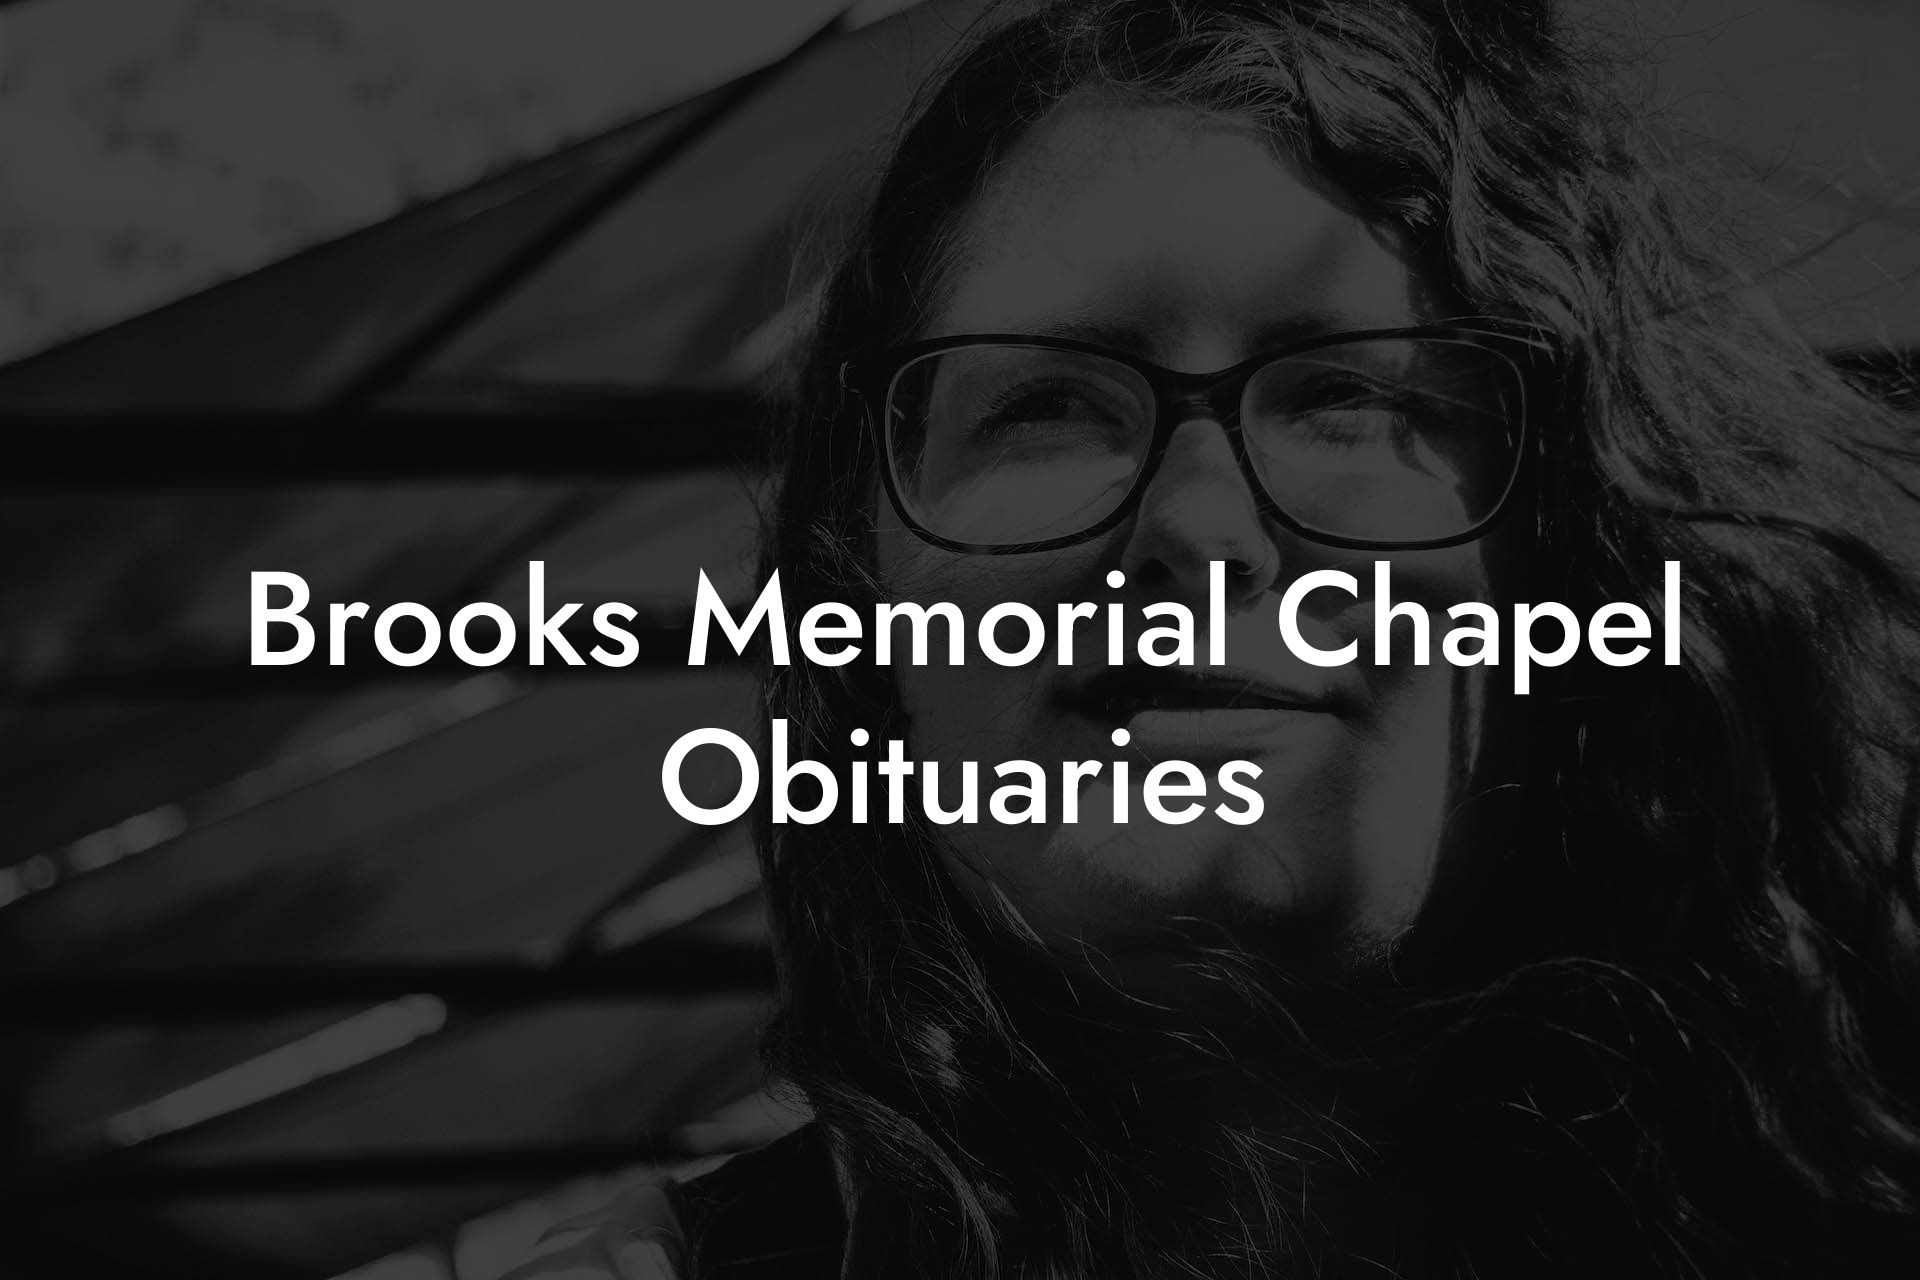 Brooks Memorial Chapel Obituaries